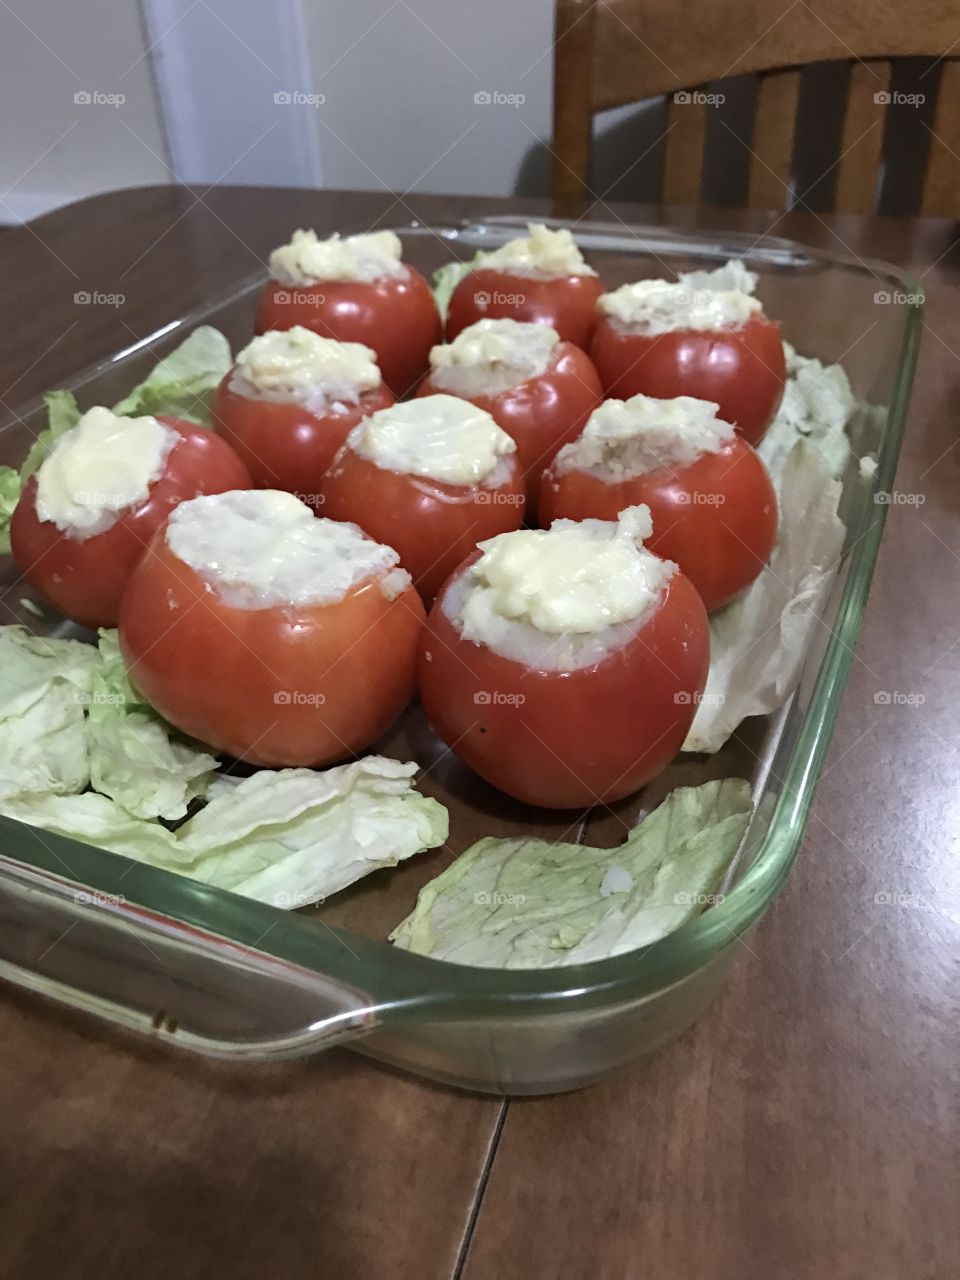 Stuffed tomatoes with tuna that husband made